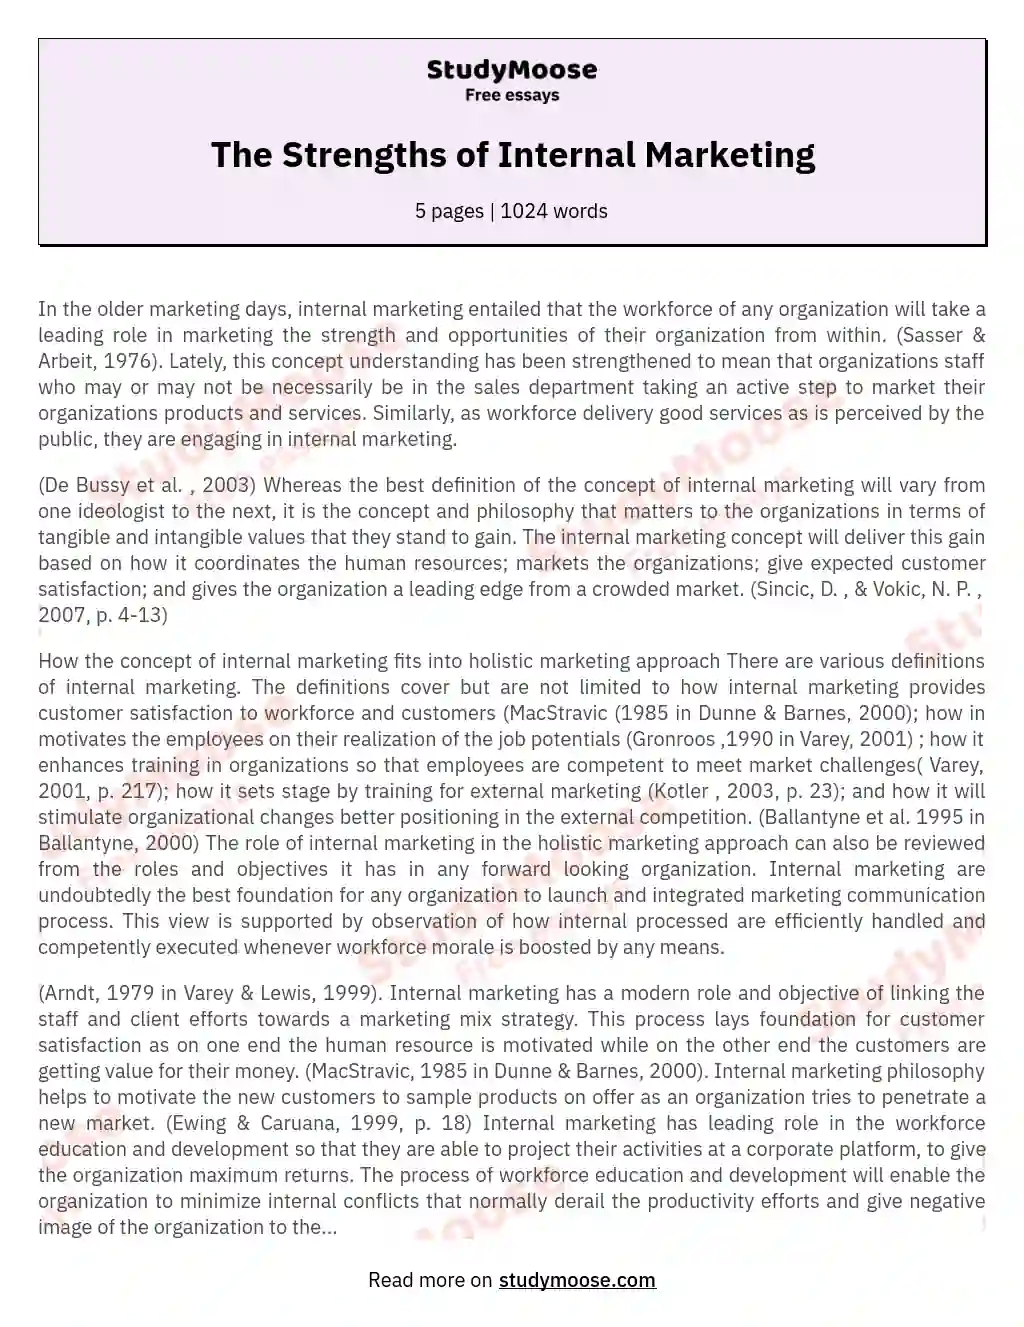 The Strengths of Internal Marketing essay